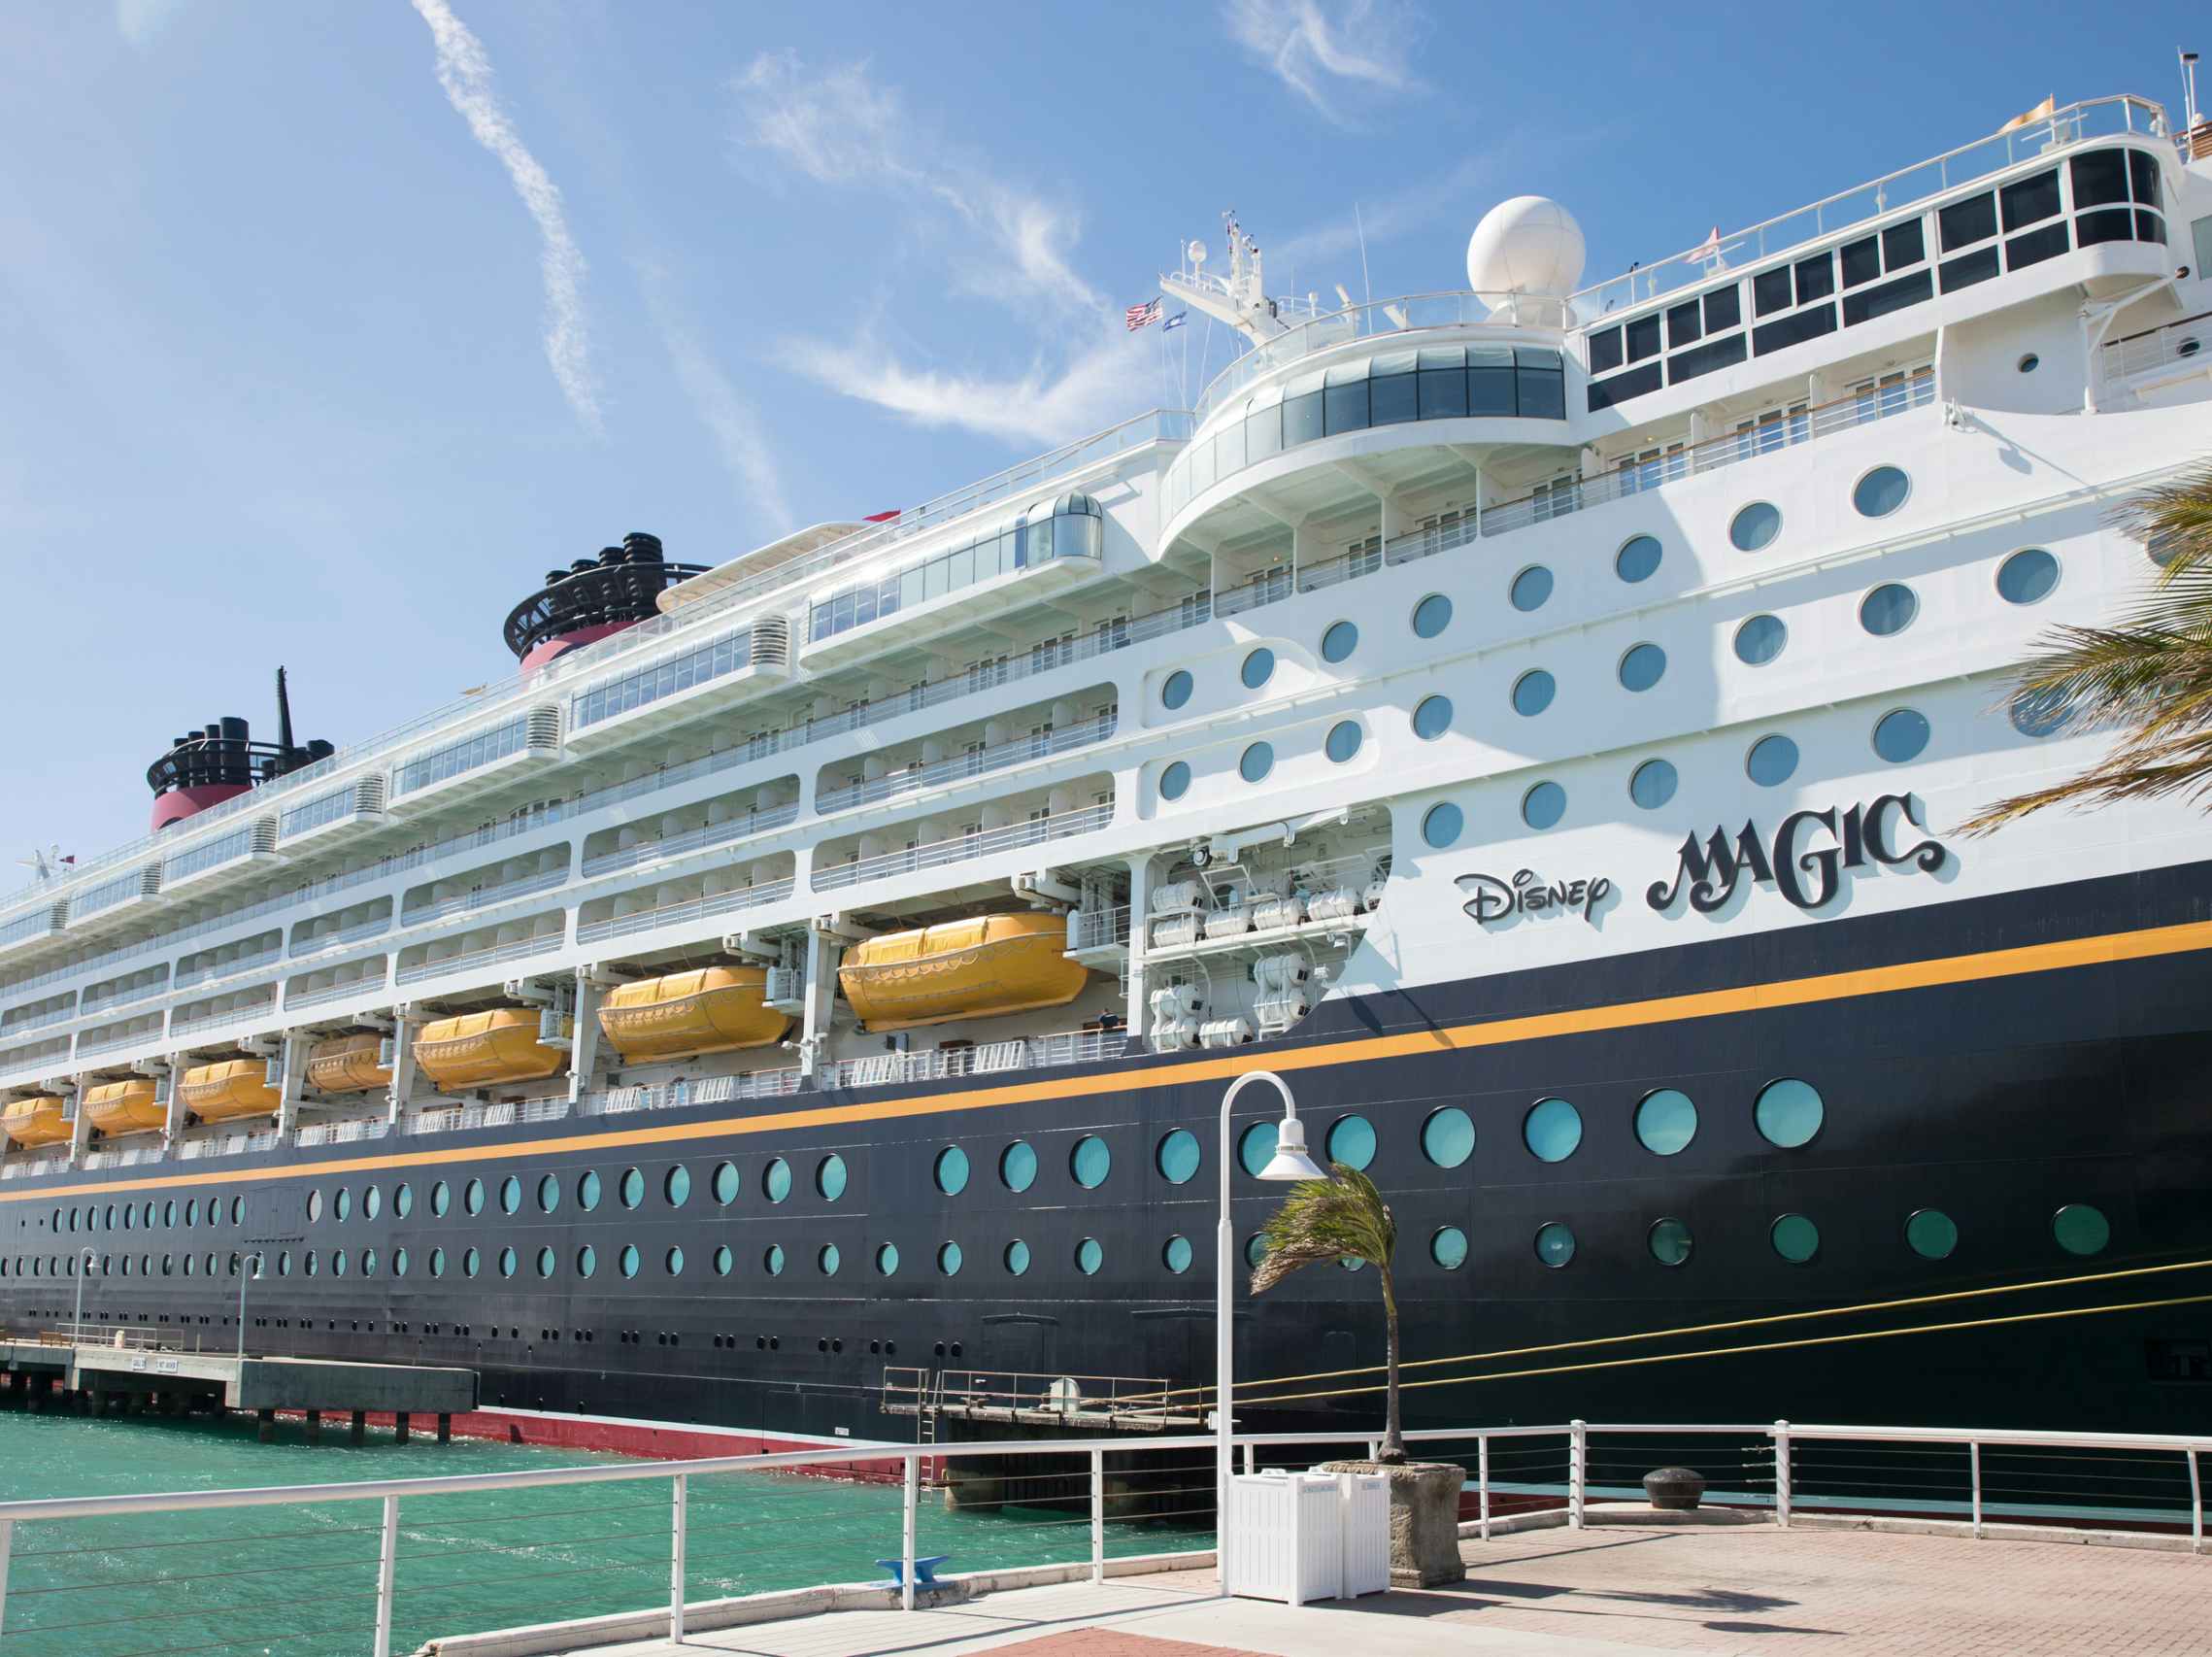 Disney Magic ship in port